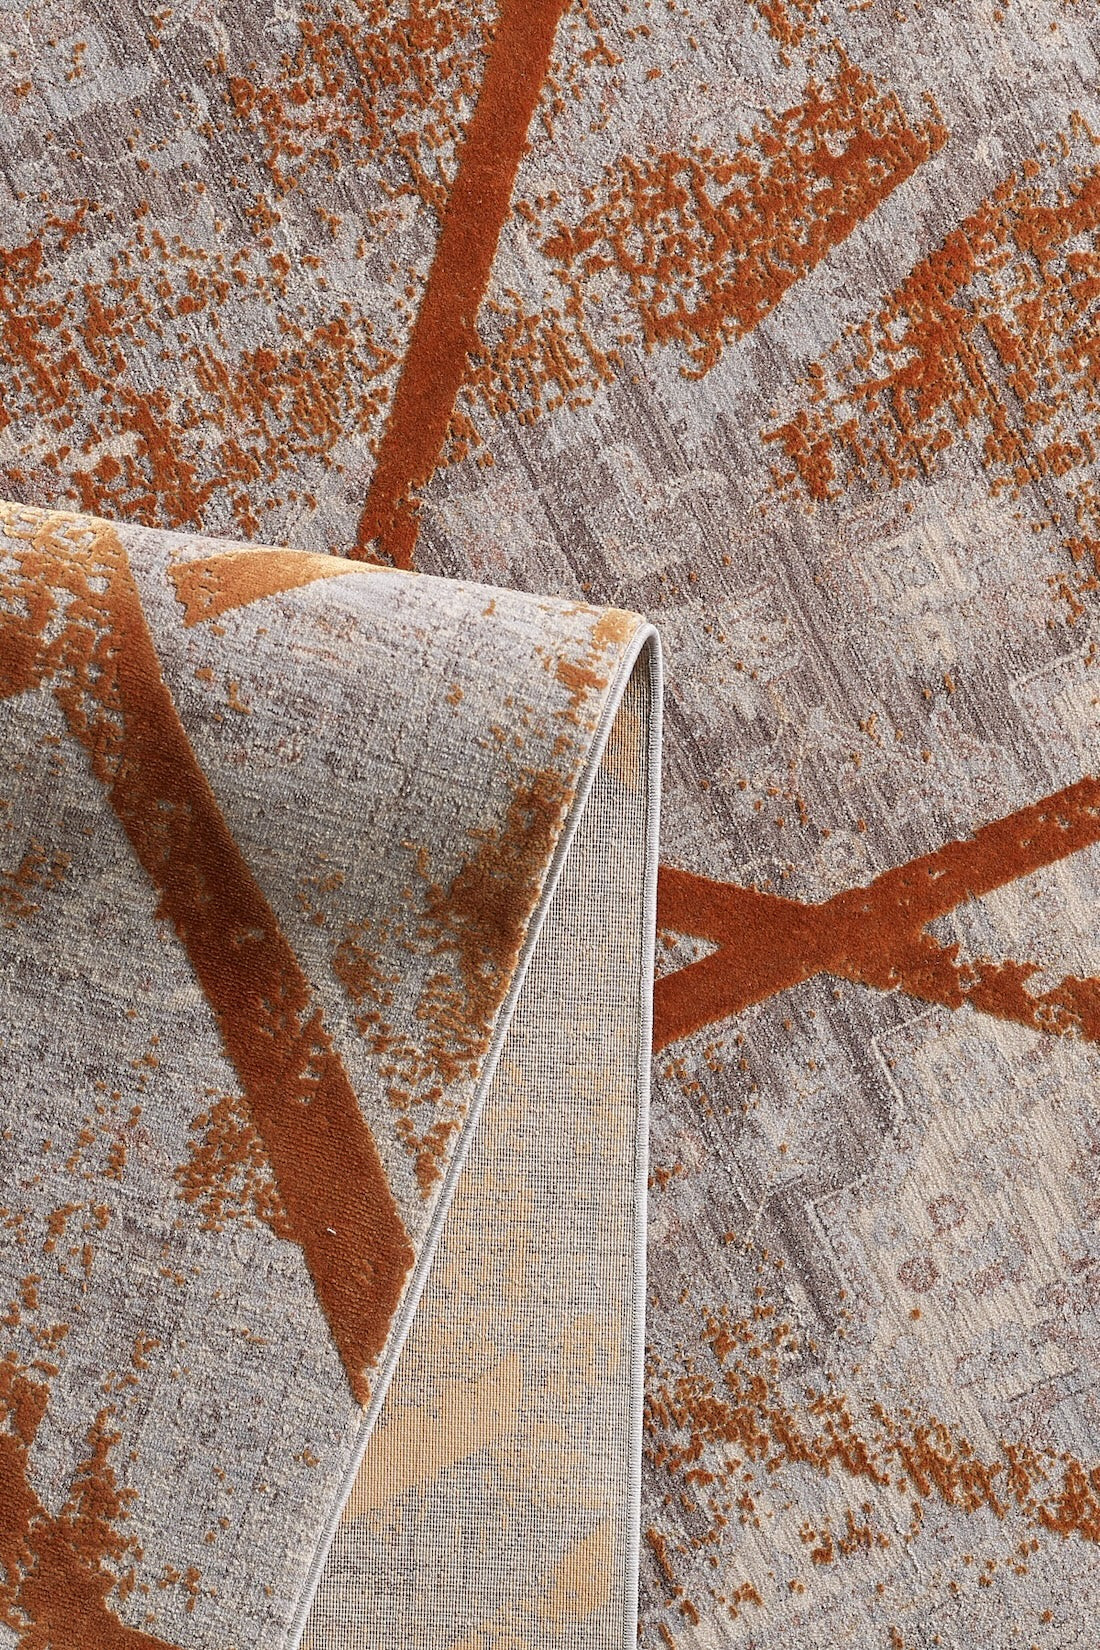 Dominant Lineage Moderner Teppich – Orangerot – HRD007 